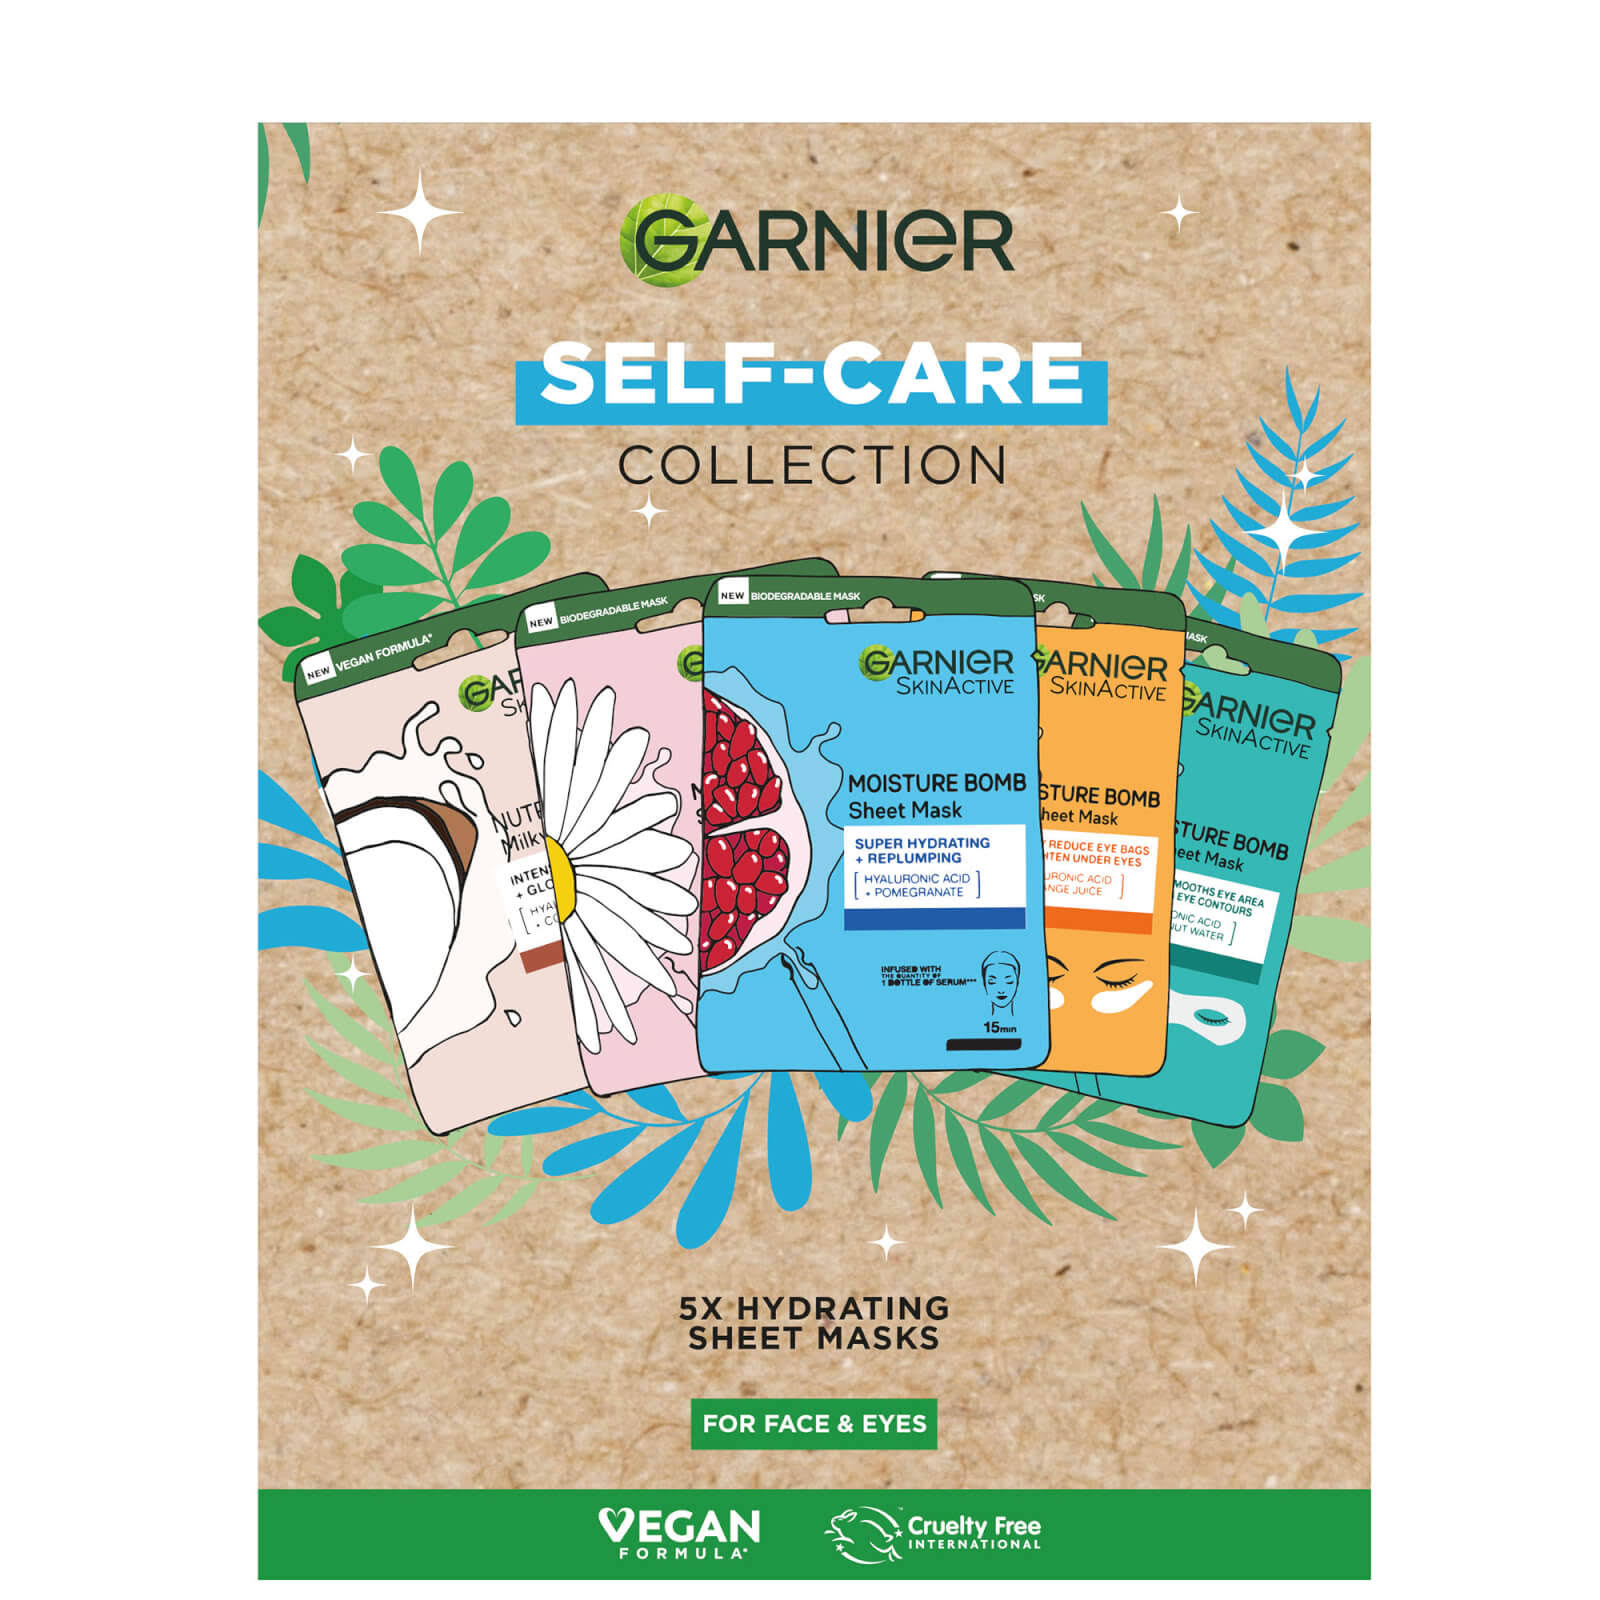 Garnier Self-Care Collection Gift Set